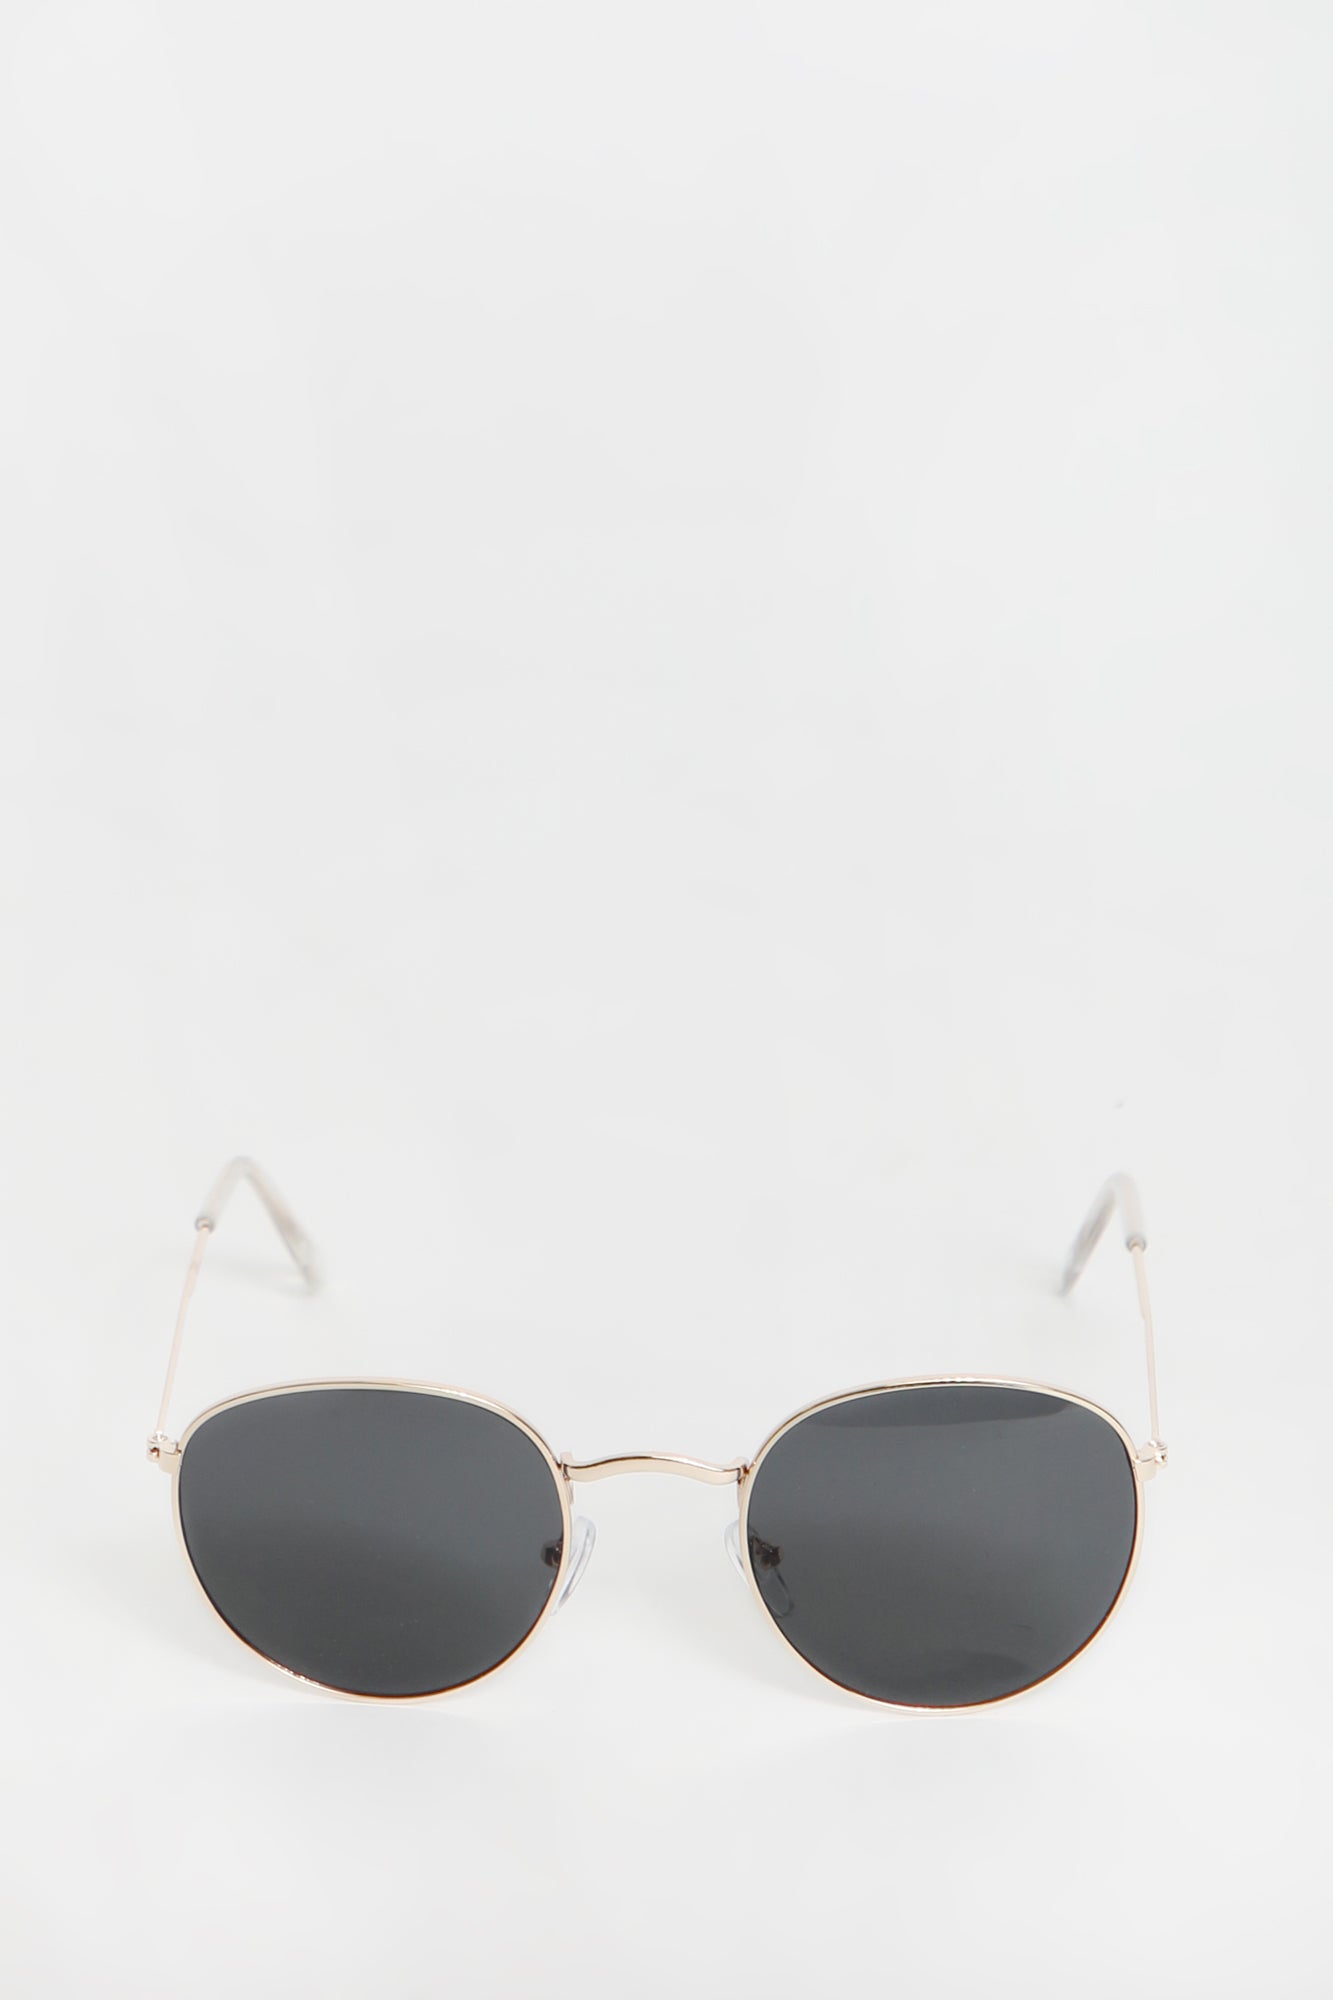 West49 Round Revo Sunglasses - Gold / O/S